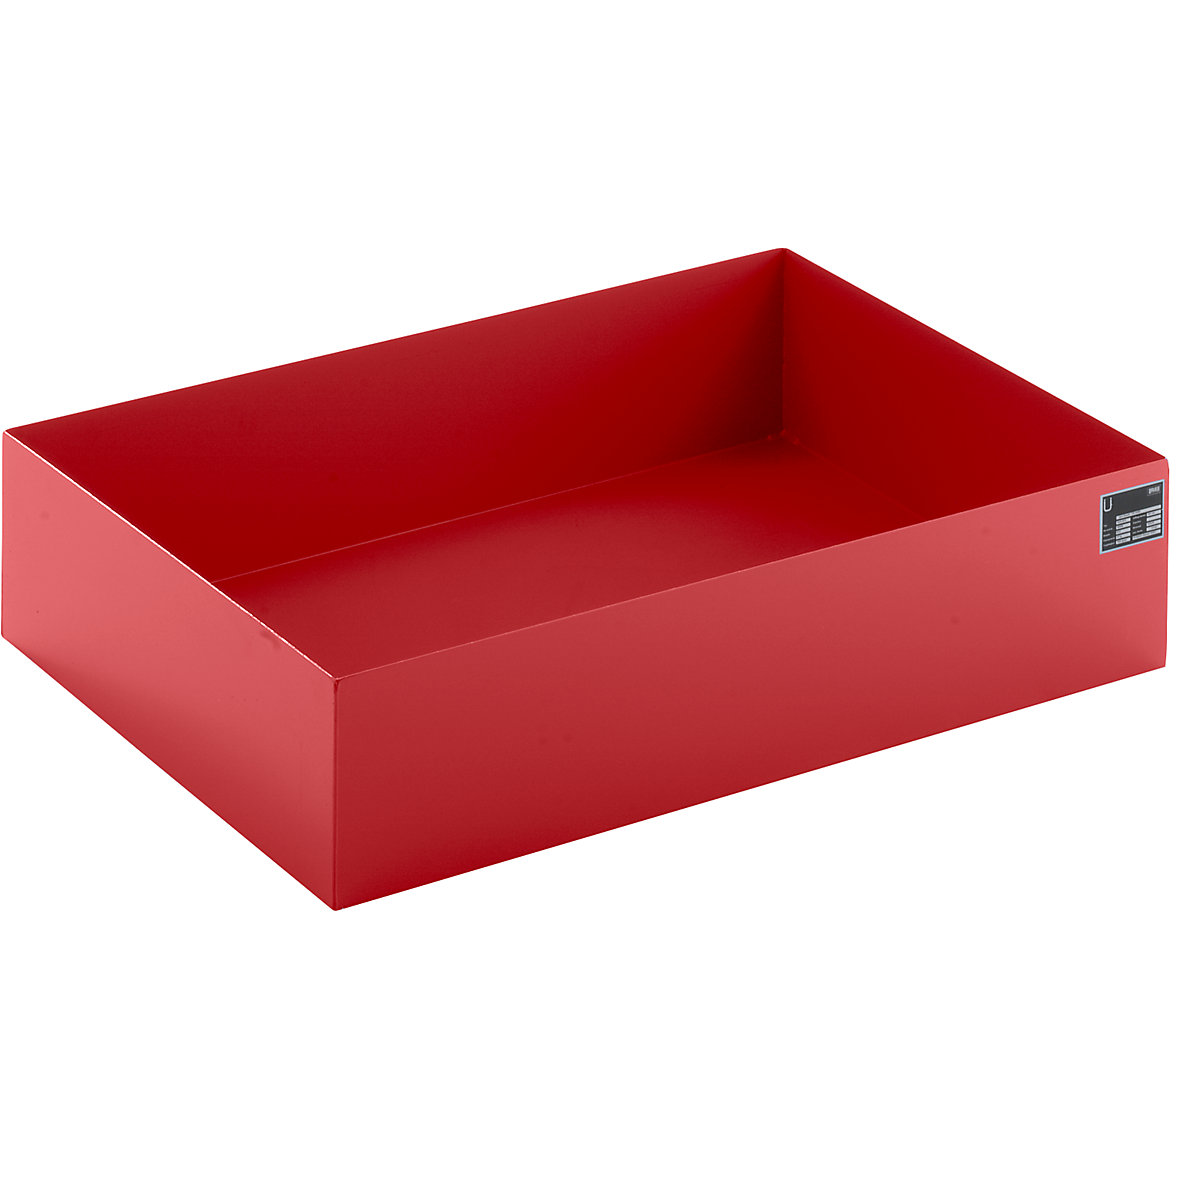 EUROKRAFTbasic – Pallet sump tray, LxWxH 1200 x 800 x 260 mm, red RAL 3000